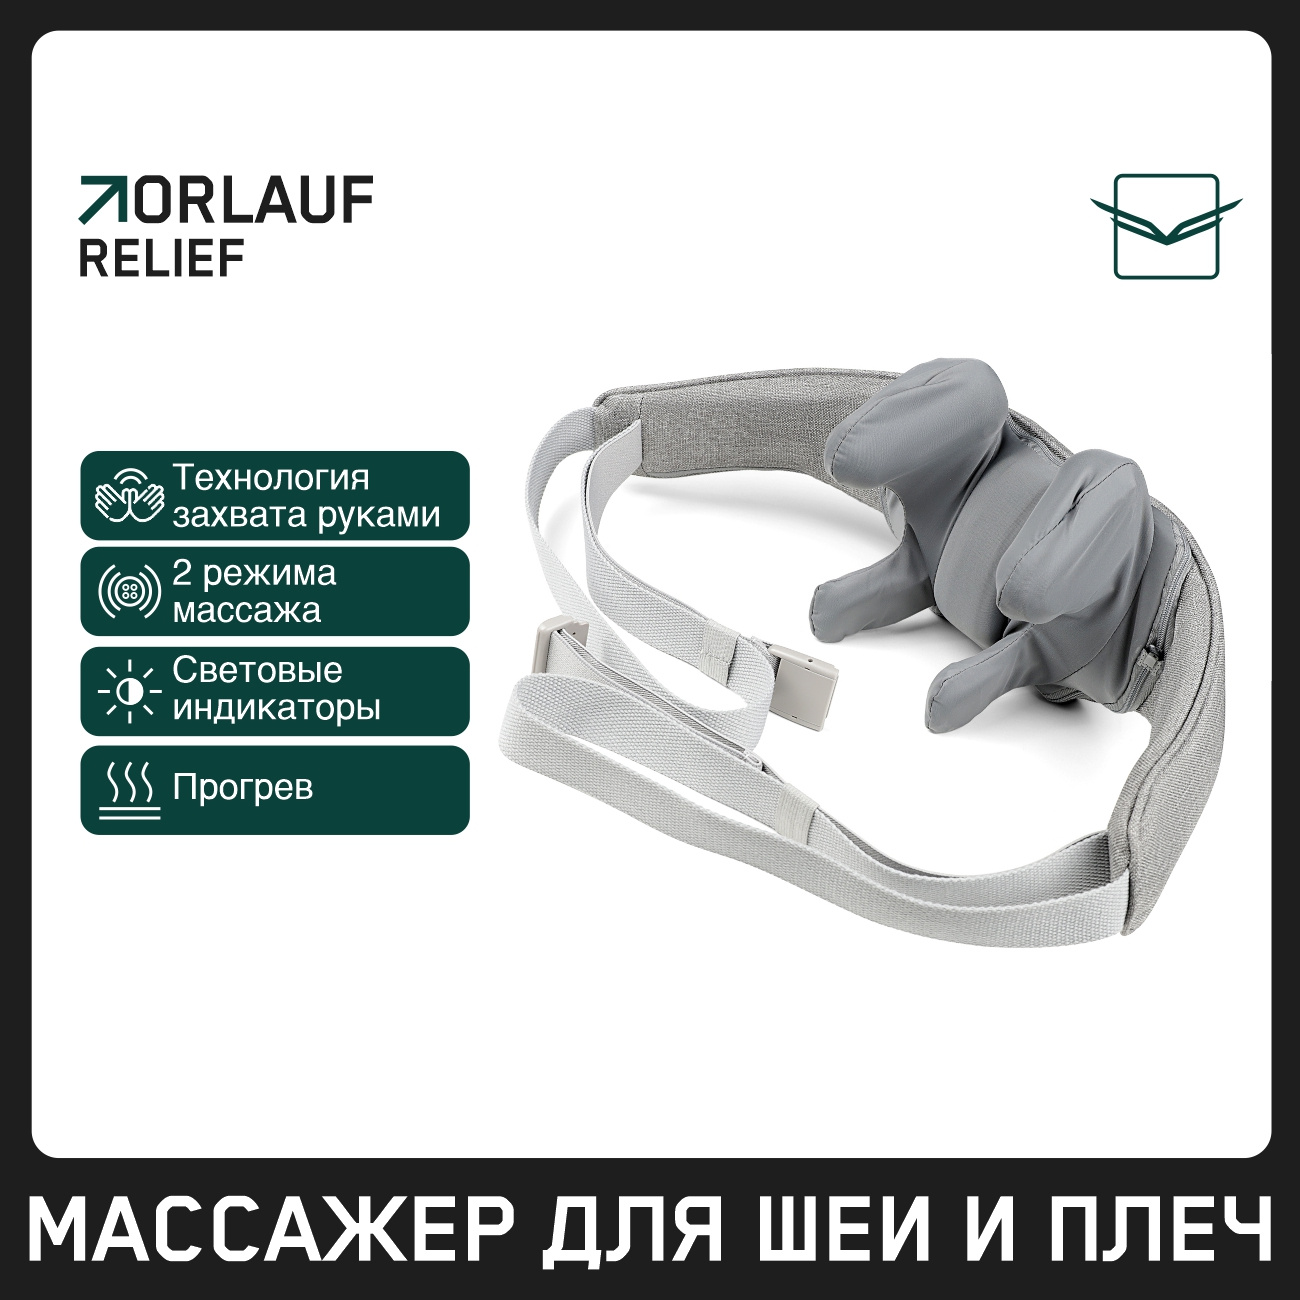 Orlauf Relief из каталога устройств для массажа в Омске по цене 9900 ₽